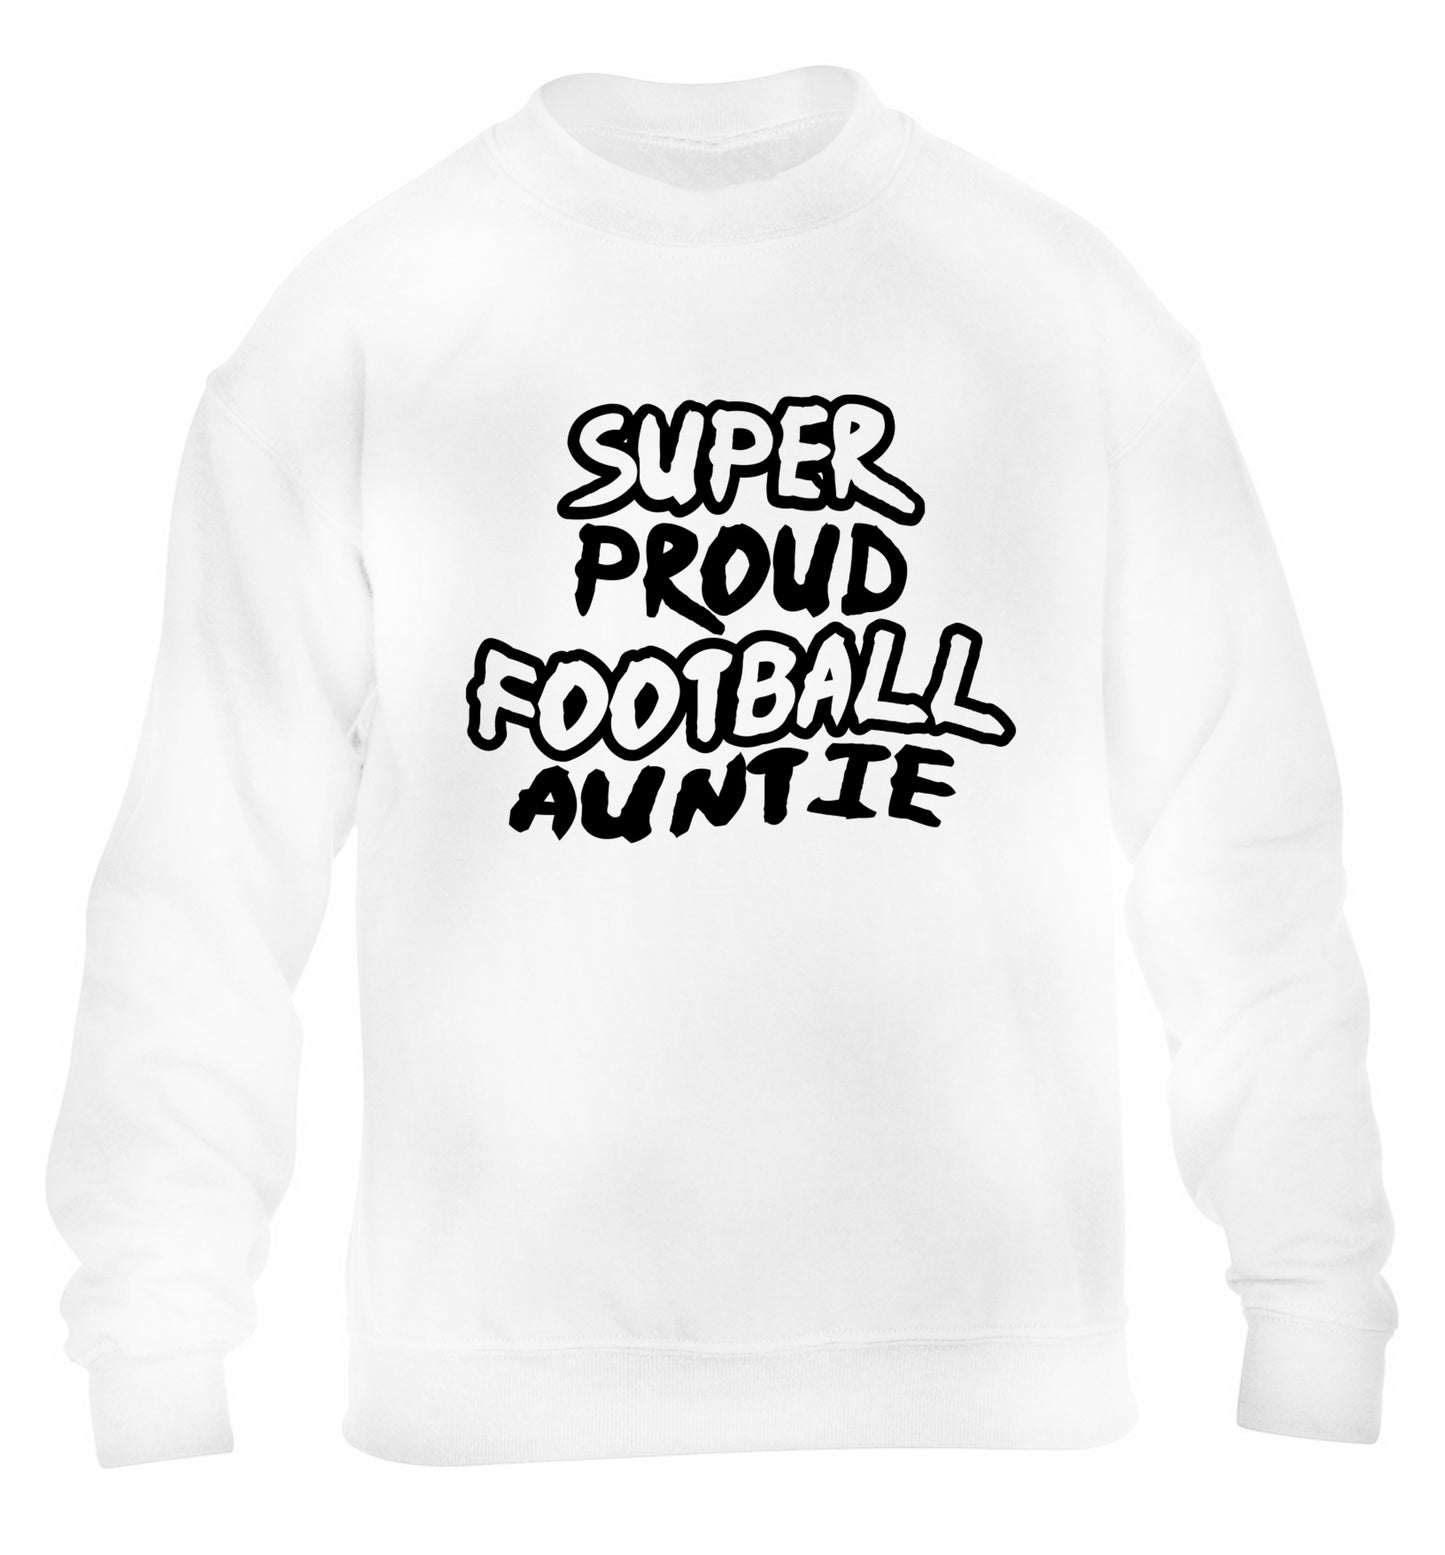 Super proud football auntie children's white sweater 12-14 Years